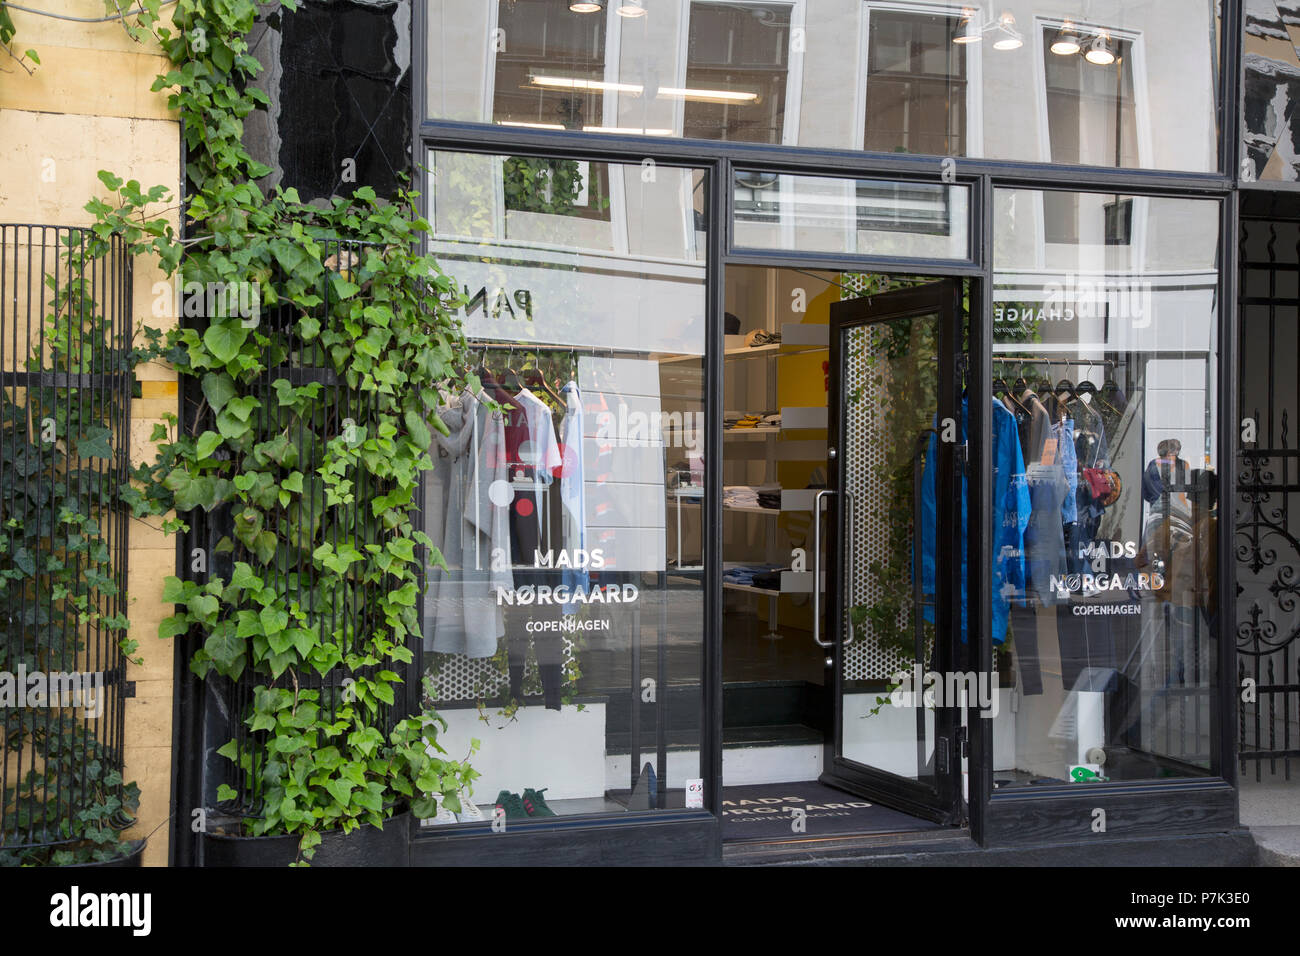 Mads Norgaard Clothes Shop, Copenhagen; Denmark Stock Photo - Alamy